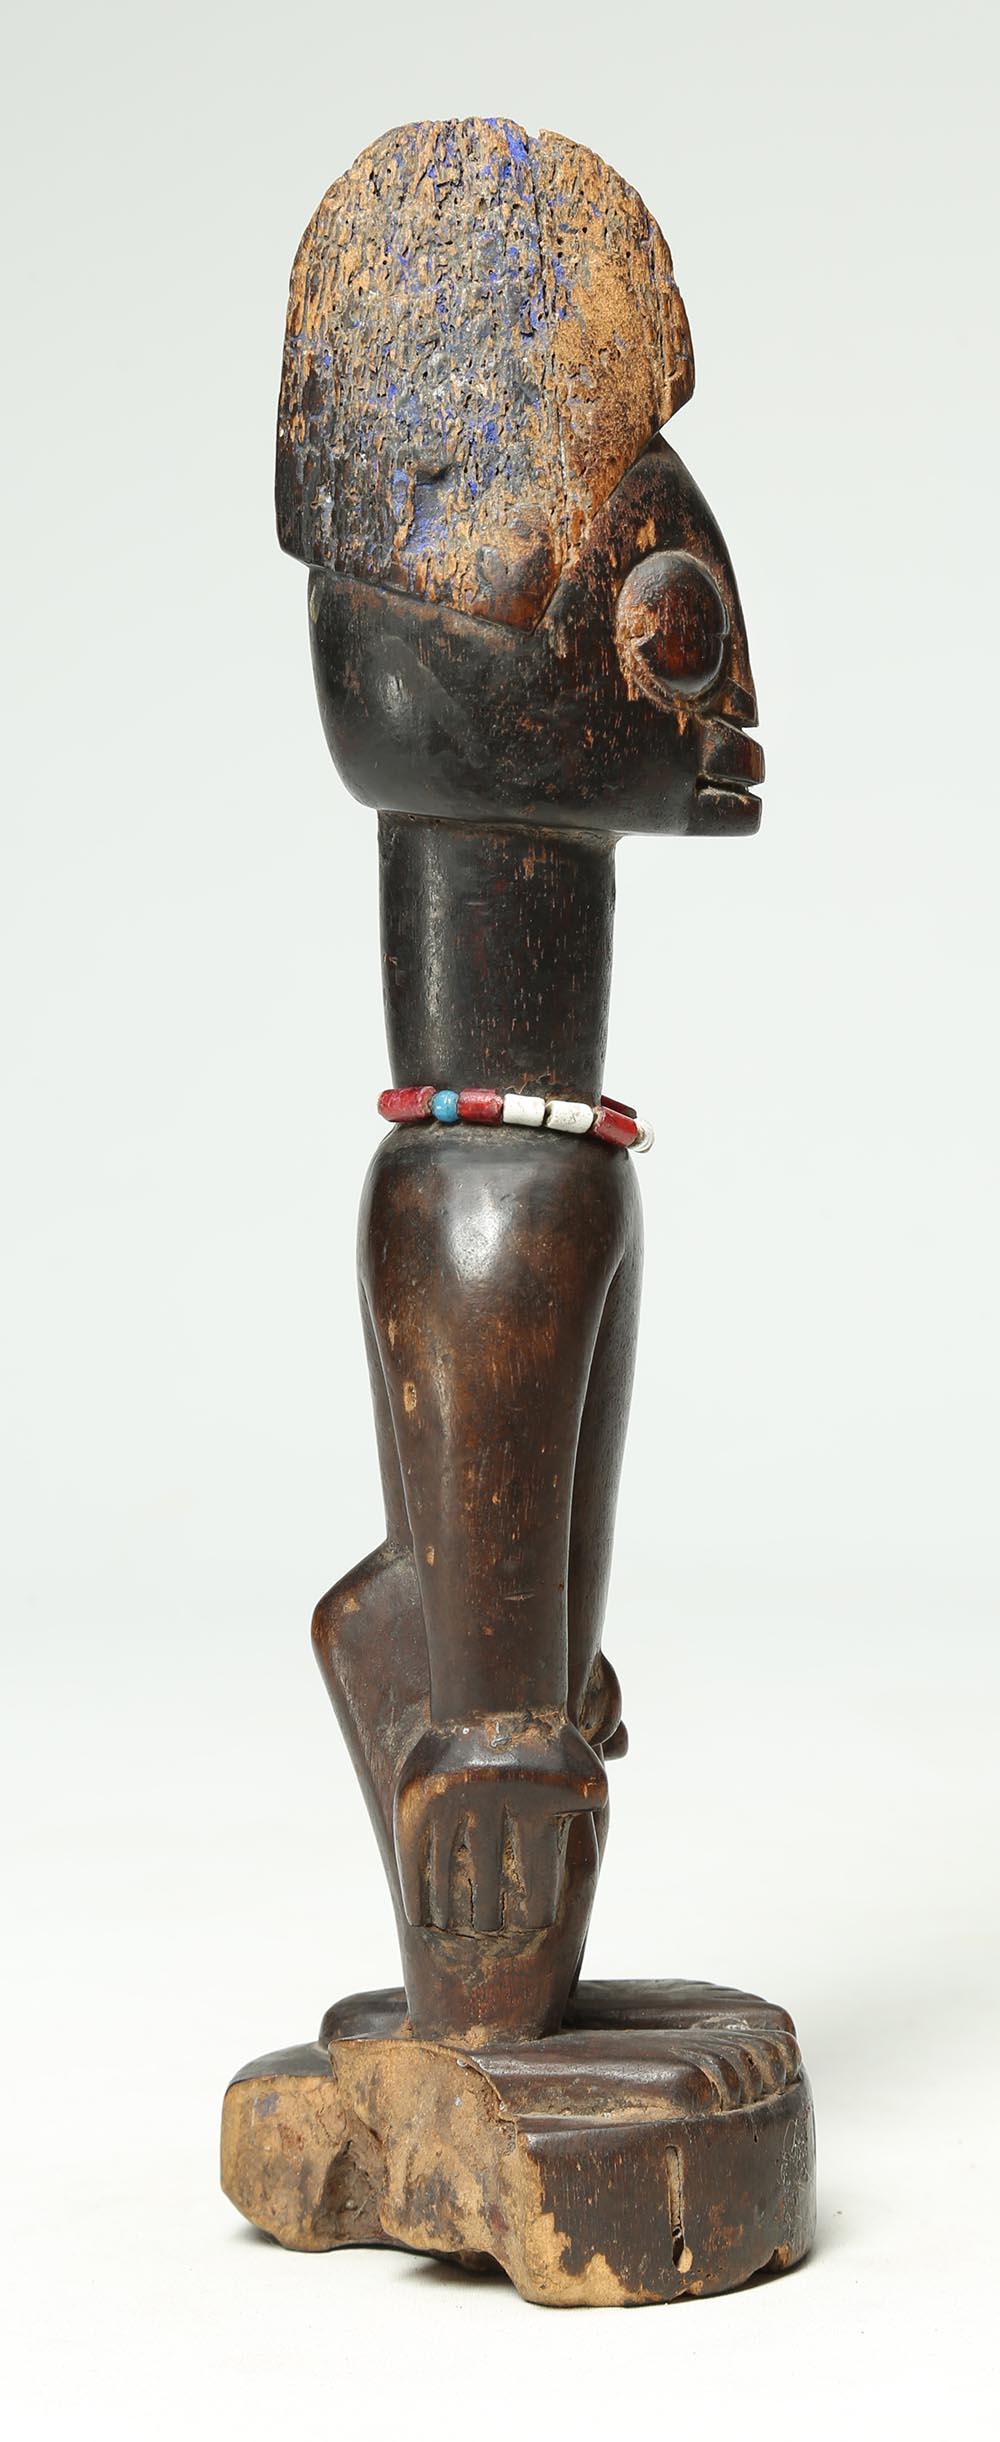 Hand-Carved Yoruba Tribal Male Figure, an Ibeji or Twin Figure, Nigeria, Africa, Large Eyes